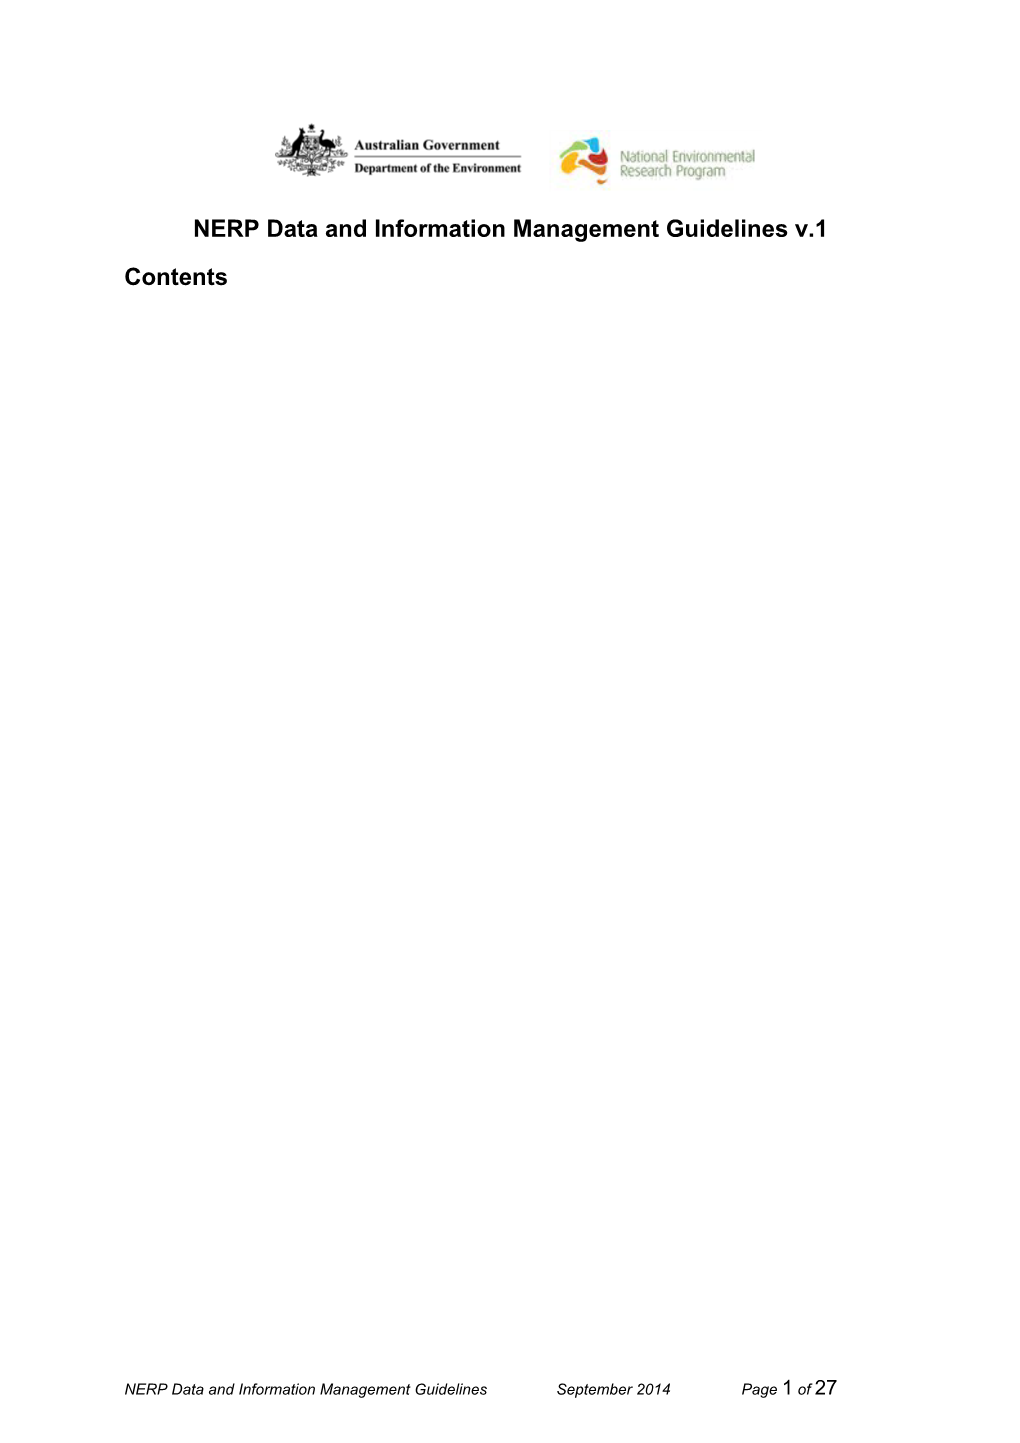 NERP Data and Information Management Guidelines V.1